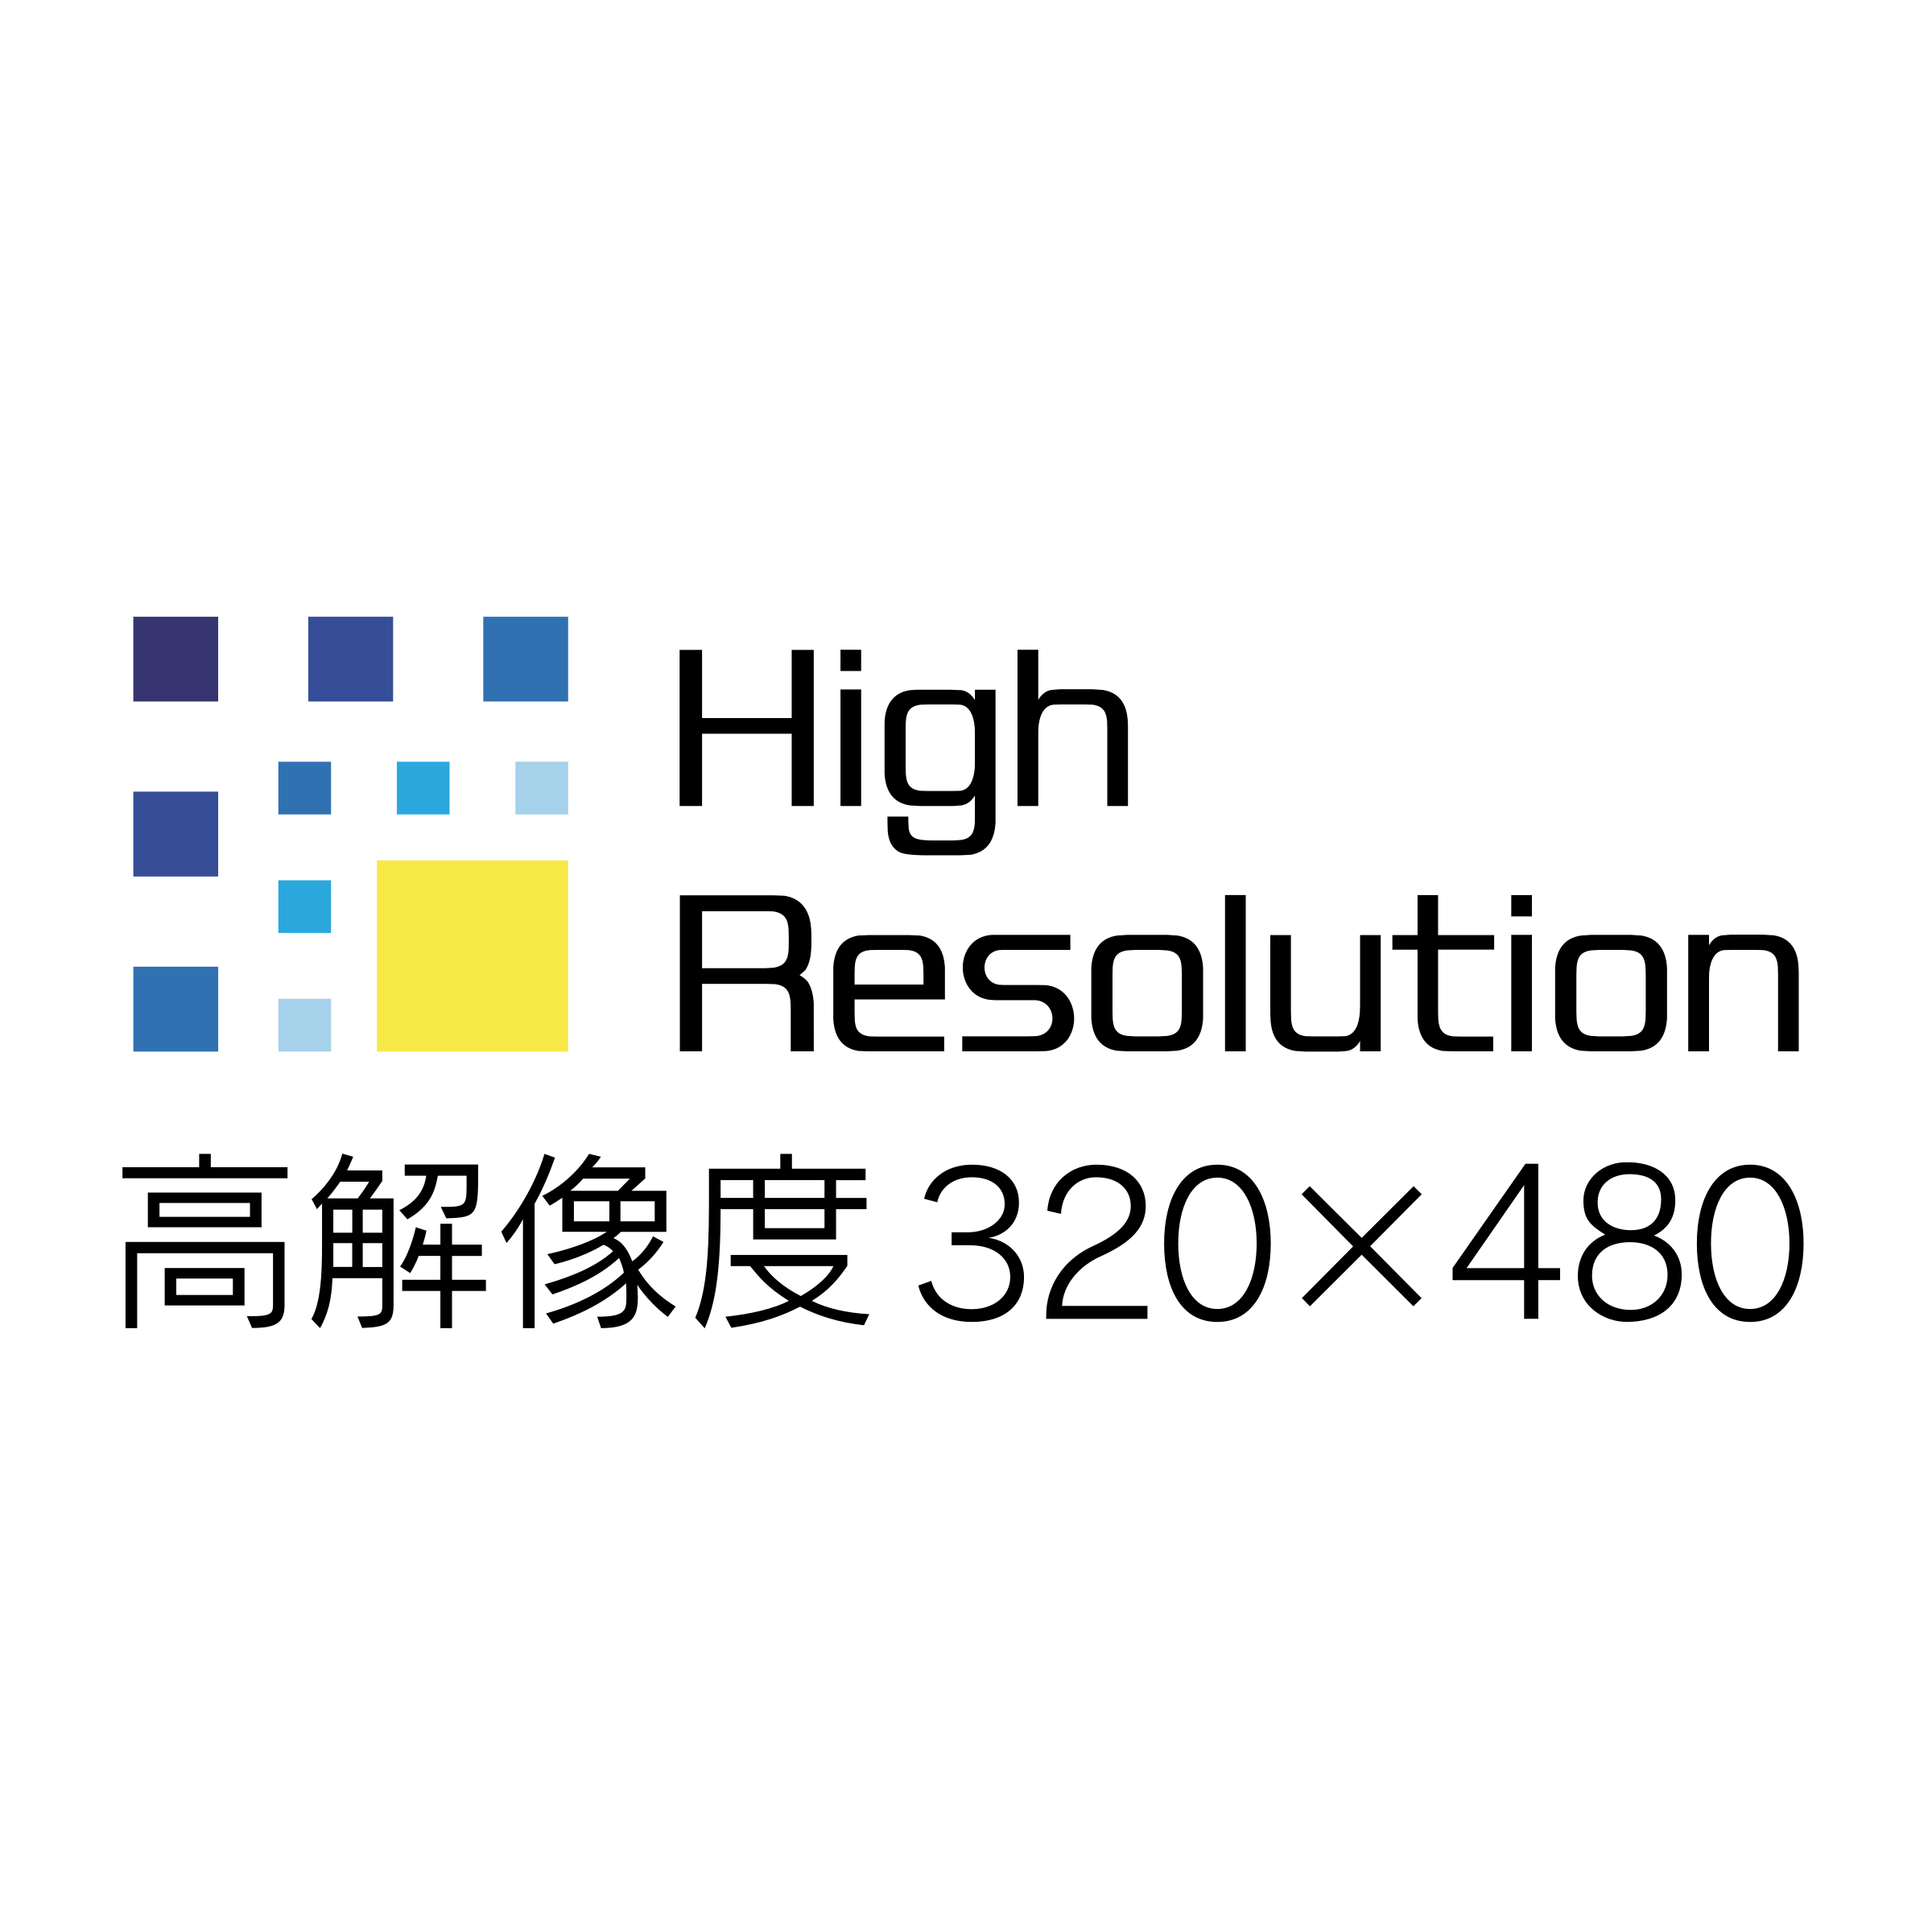 Resolution Logo - Sony Clie High Resolution Logo PNG Transparent & SVG Vector